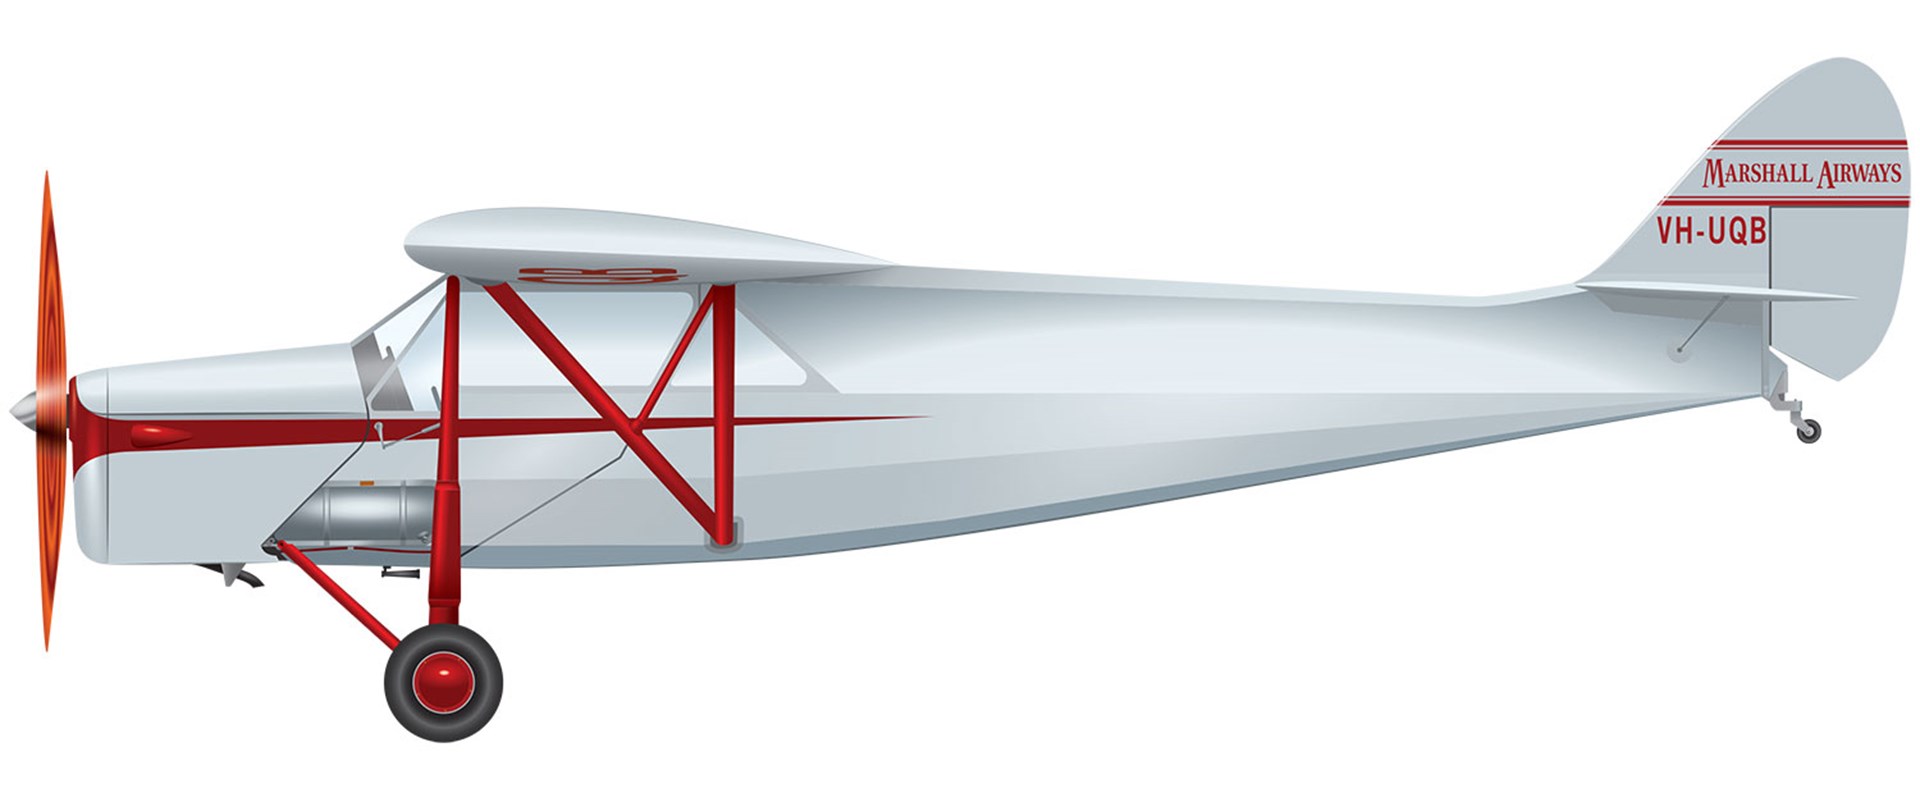 A red and white de Havilland Puss Moth aircraft. 